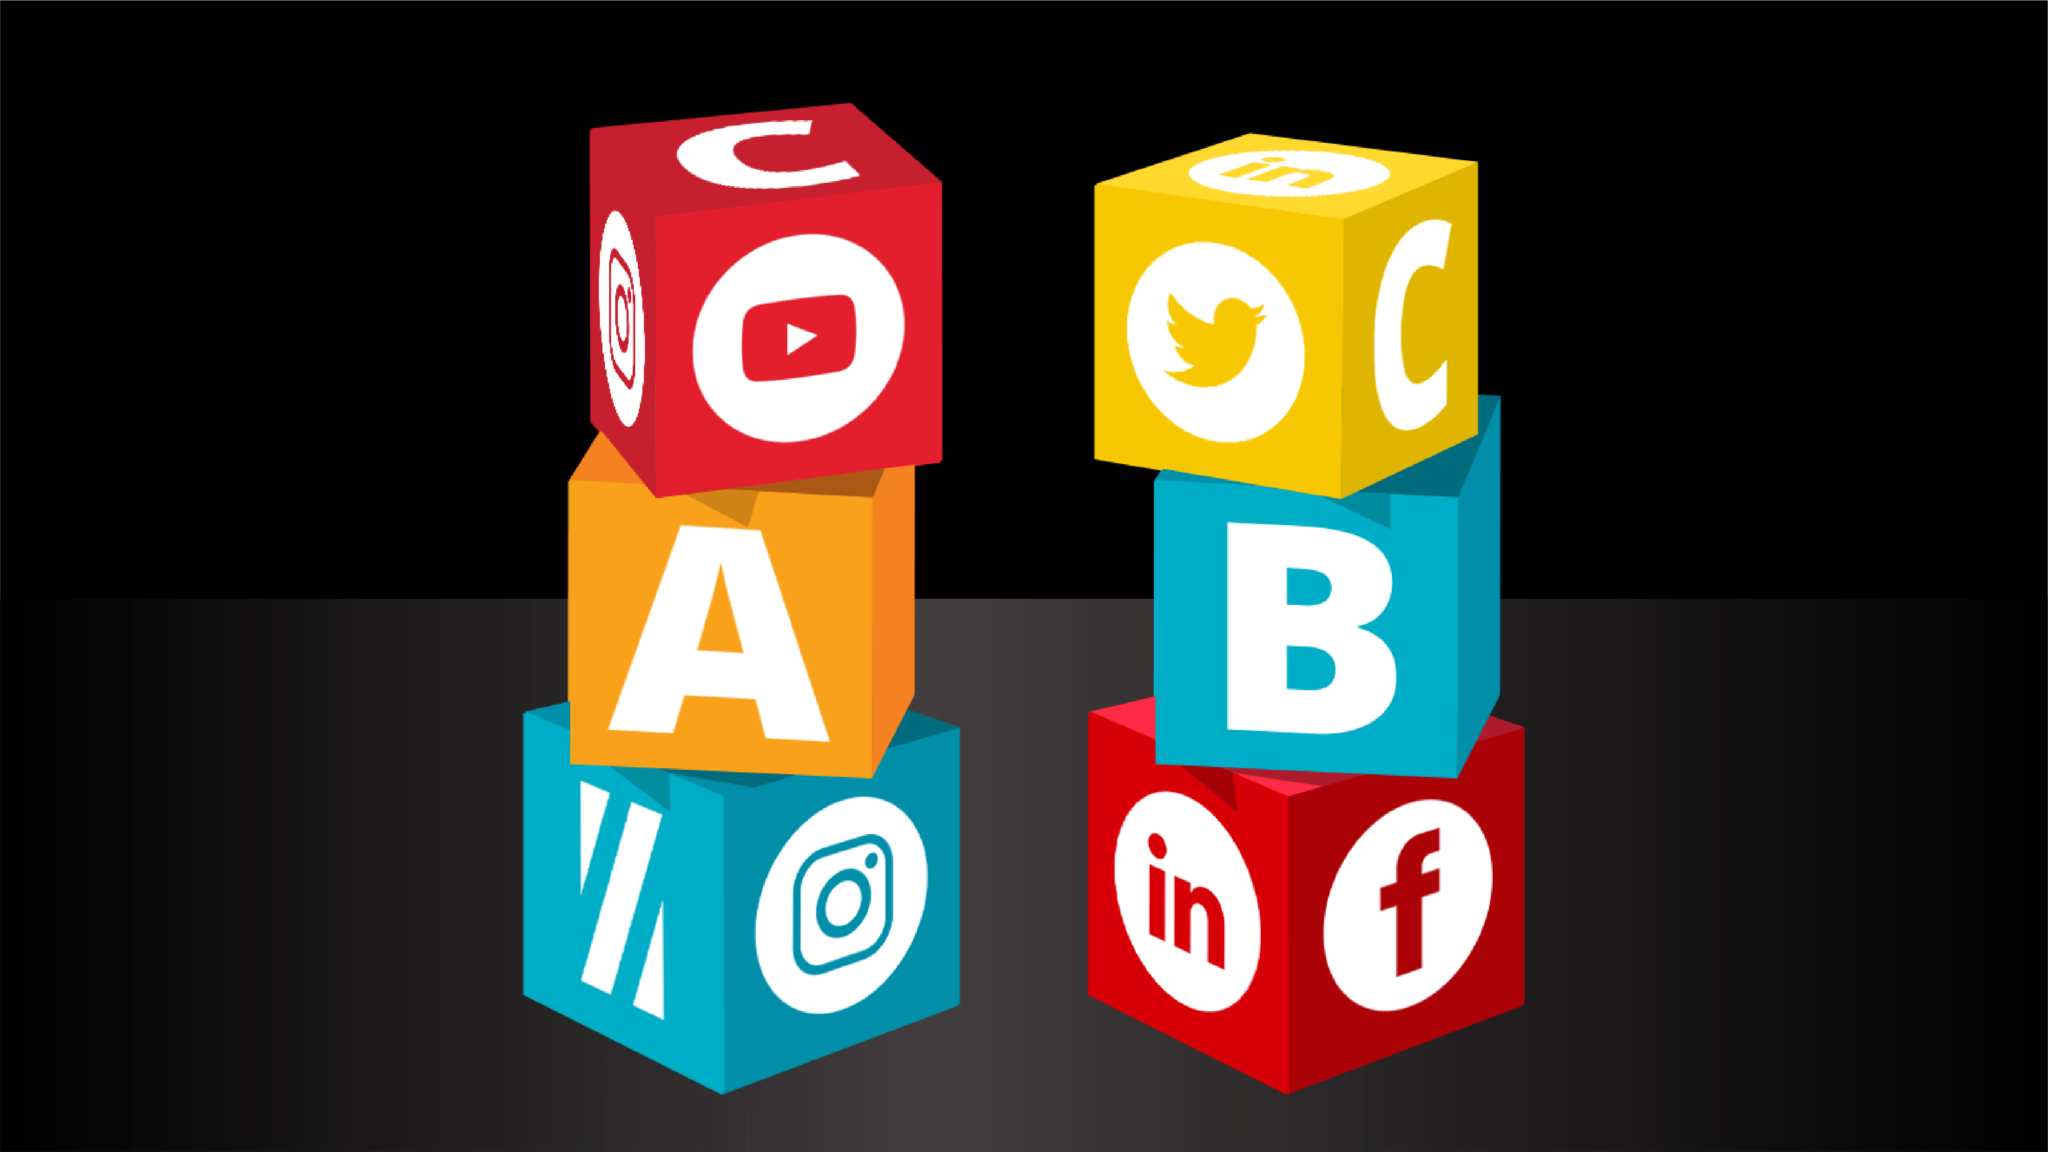 The A-B-C of building a social media presence